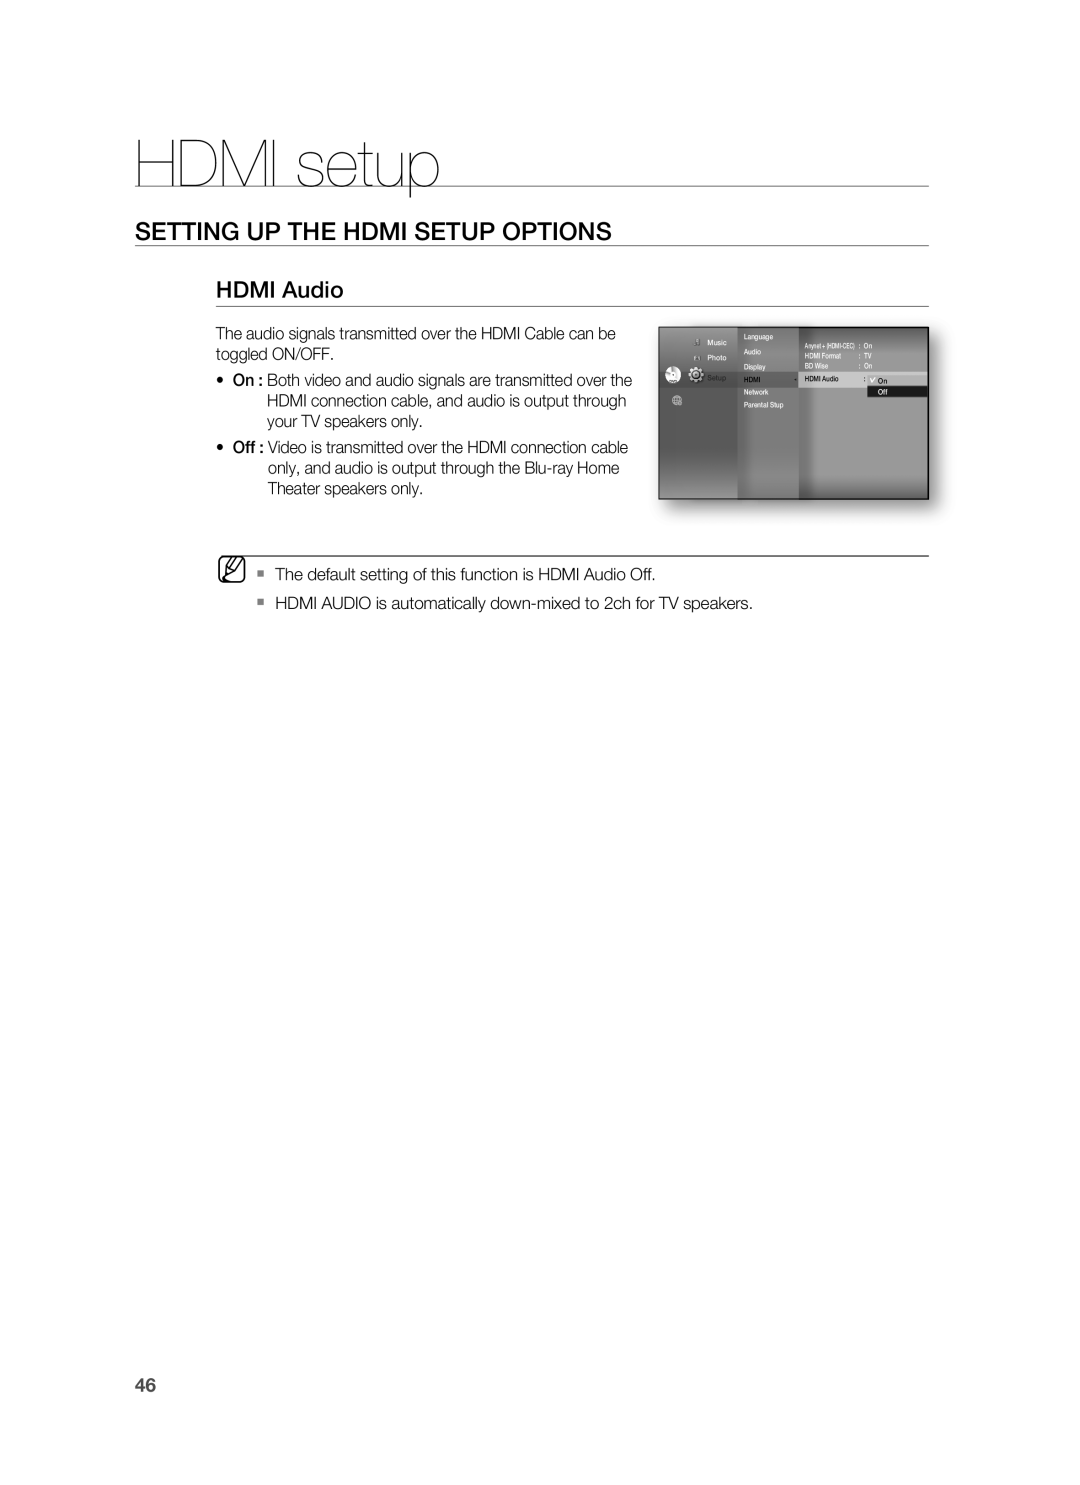 Samsung HT-BD8200 user manual HDMI Audio, HDMI setup, Setting Up The Hdmi Setup Options, toggled ON/OFF 